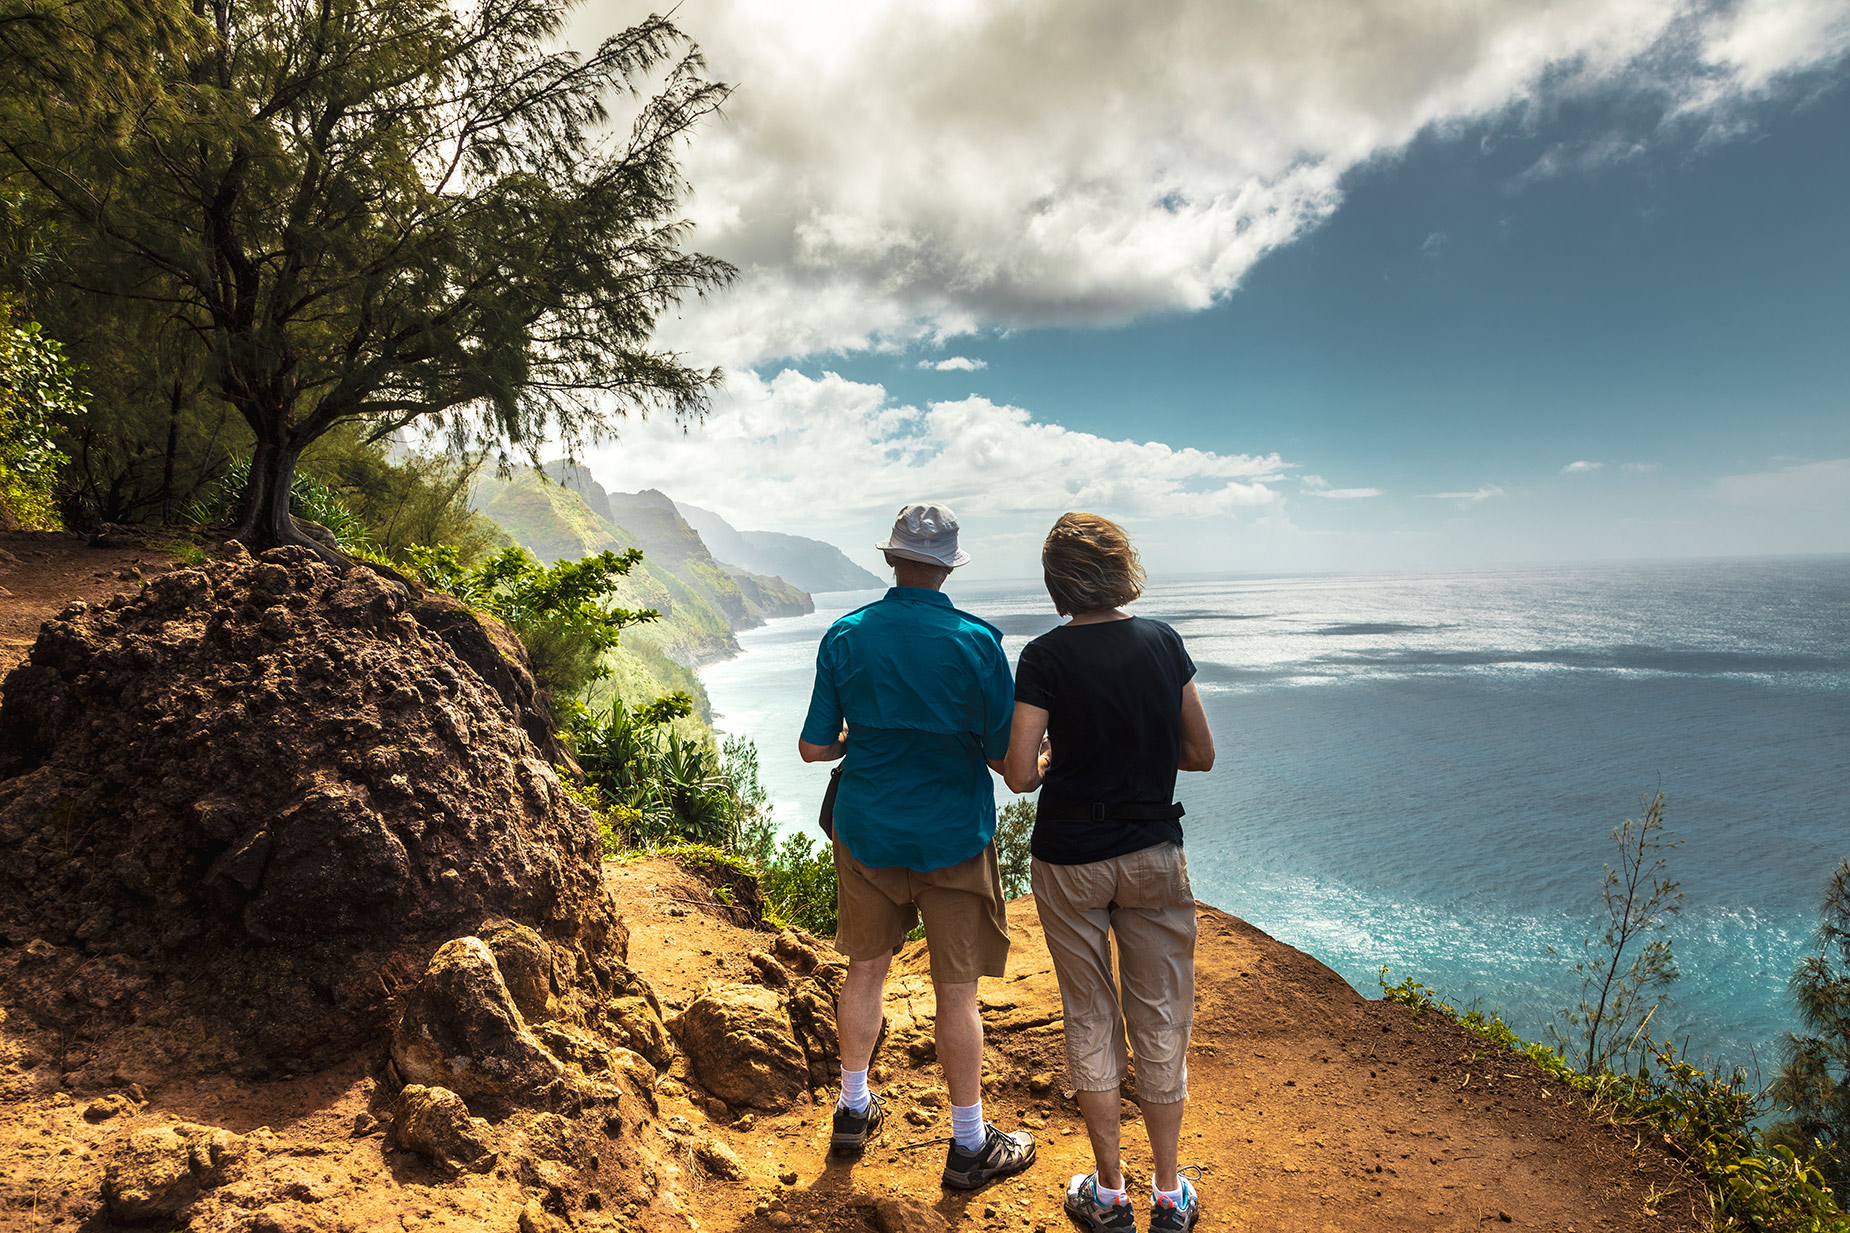 Kauai: Napali Coast hiking trail and vista point 